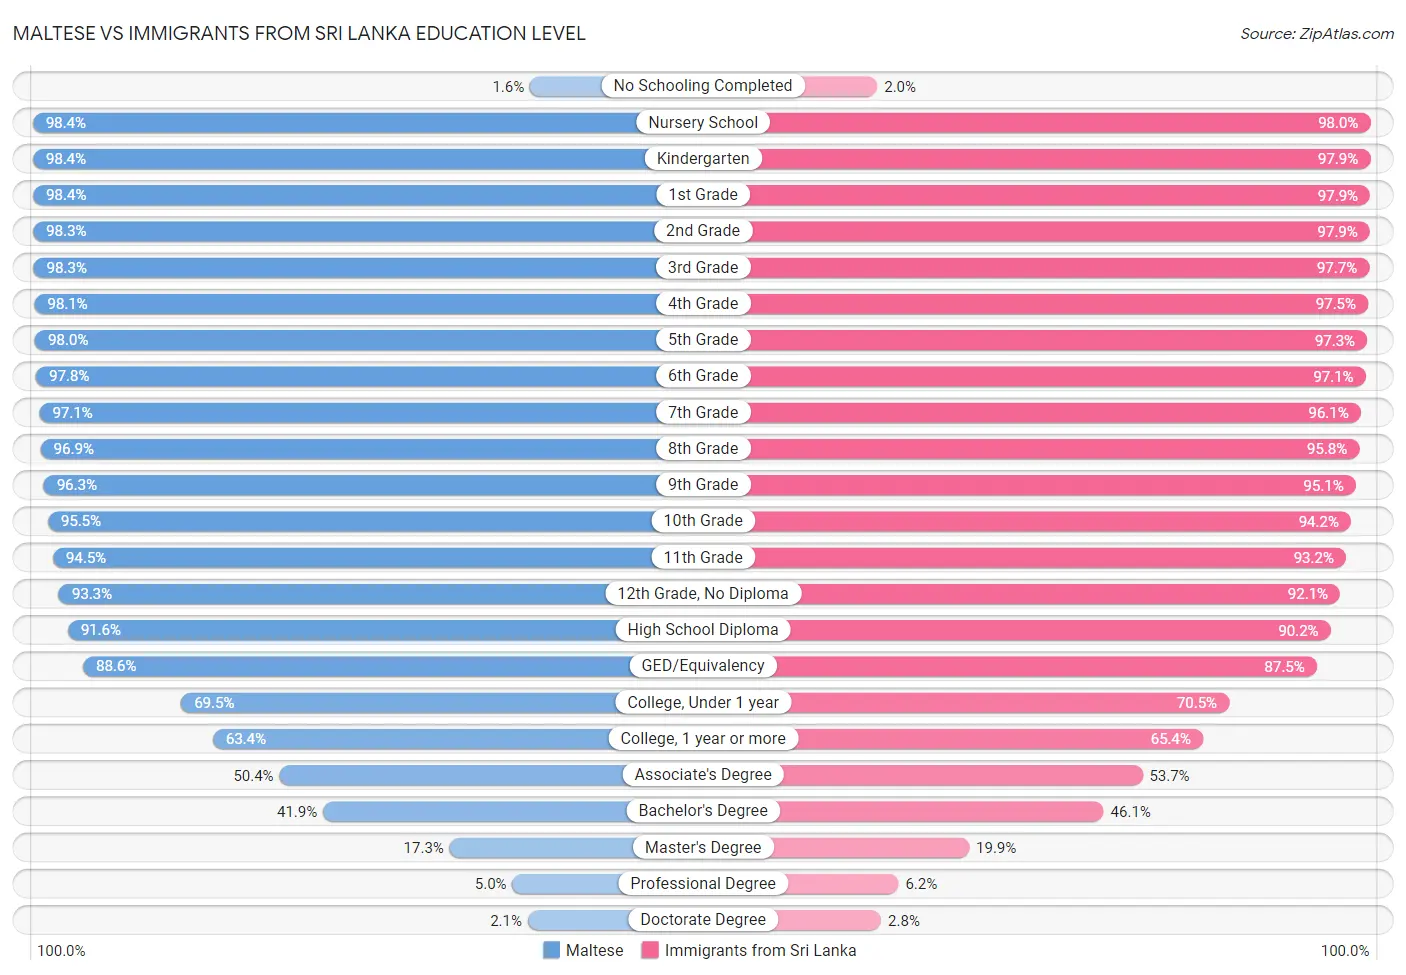 Maltese vs Immigrants from Sri Lanka Education Level